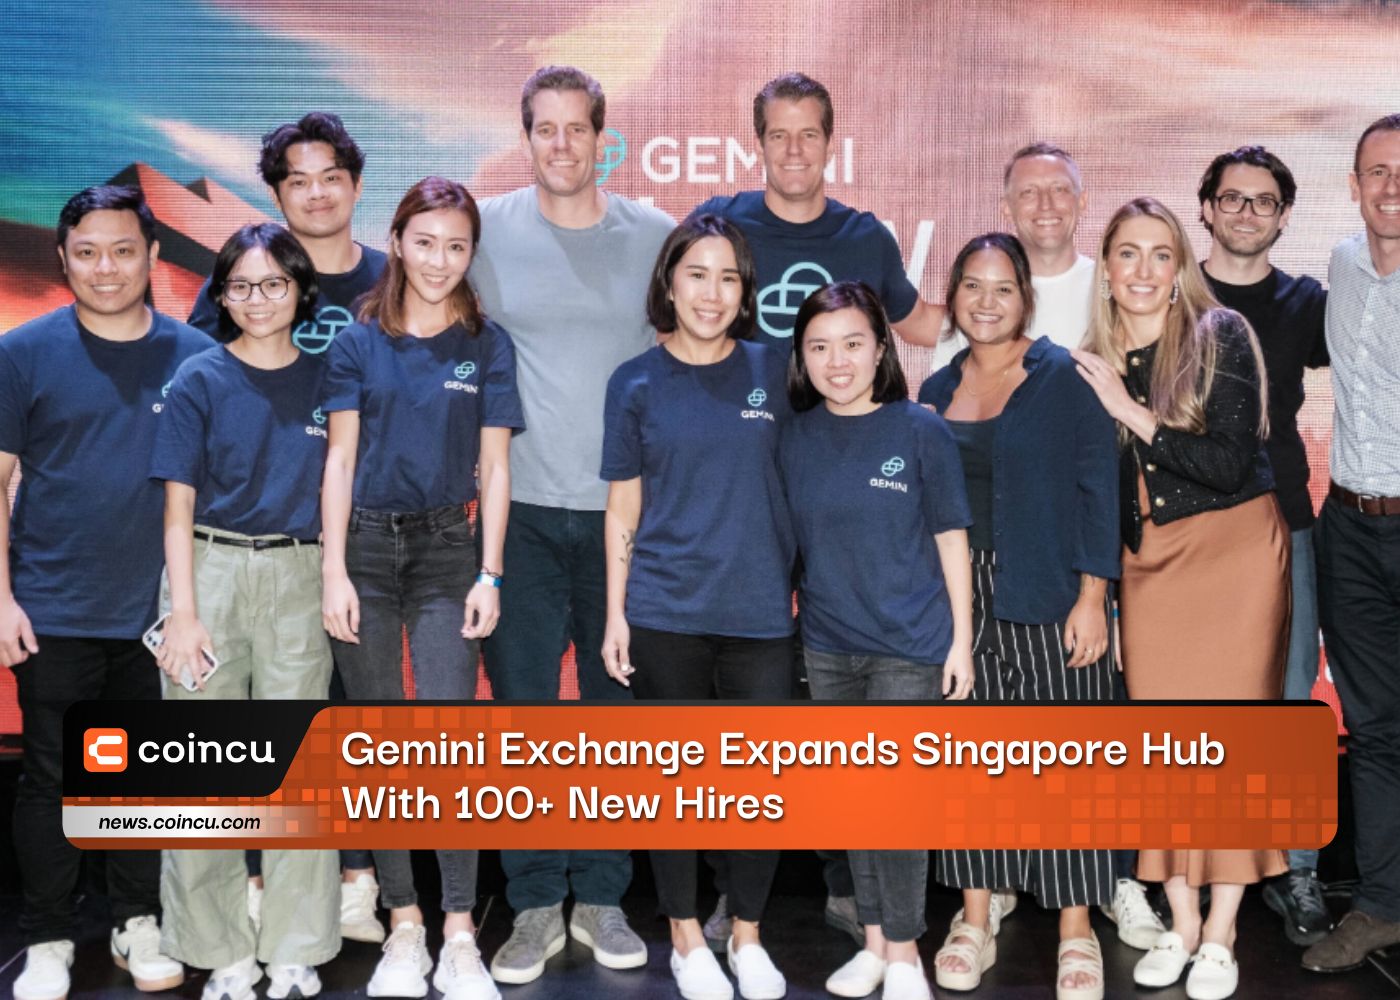 Gemini Exchange, 100명 이상의 신규 채용으로 싱가포르 허브 확장